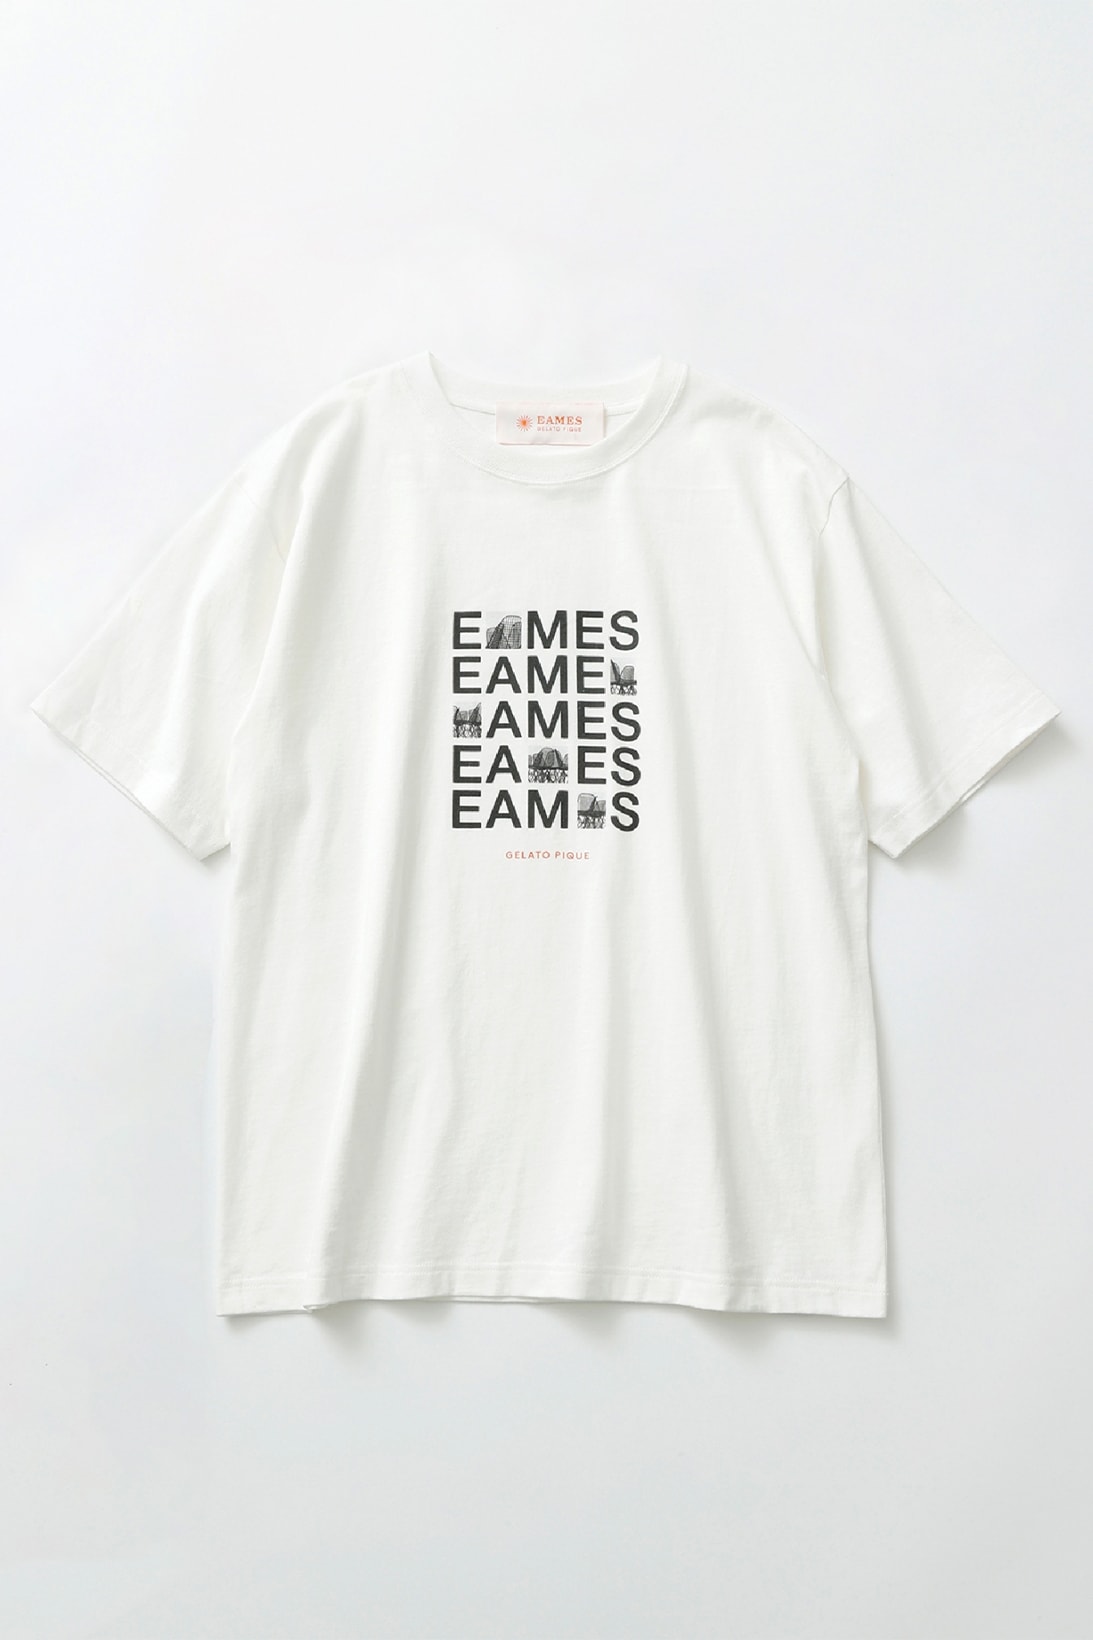 Gelato Pique Eames Home Collection Accessories Design T-shirt White